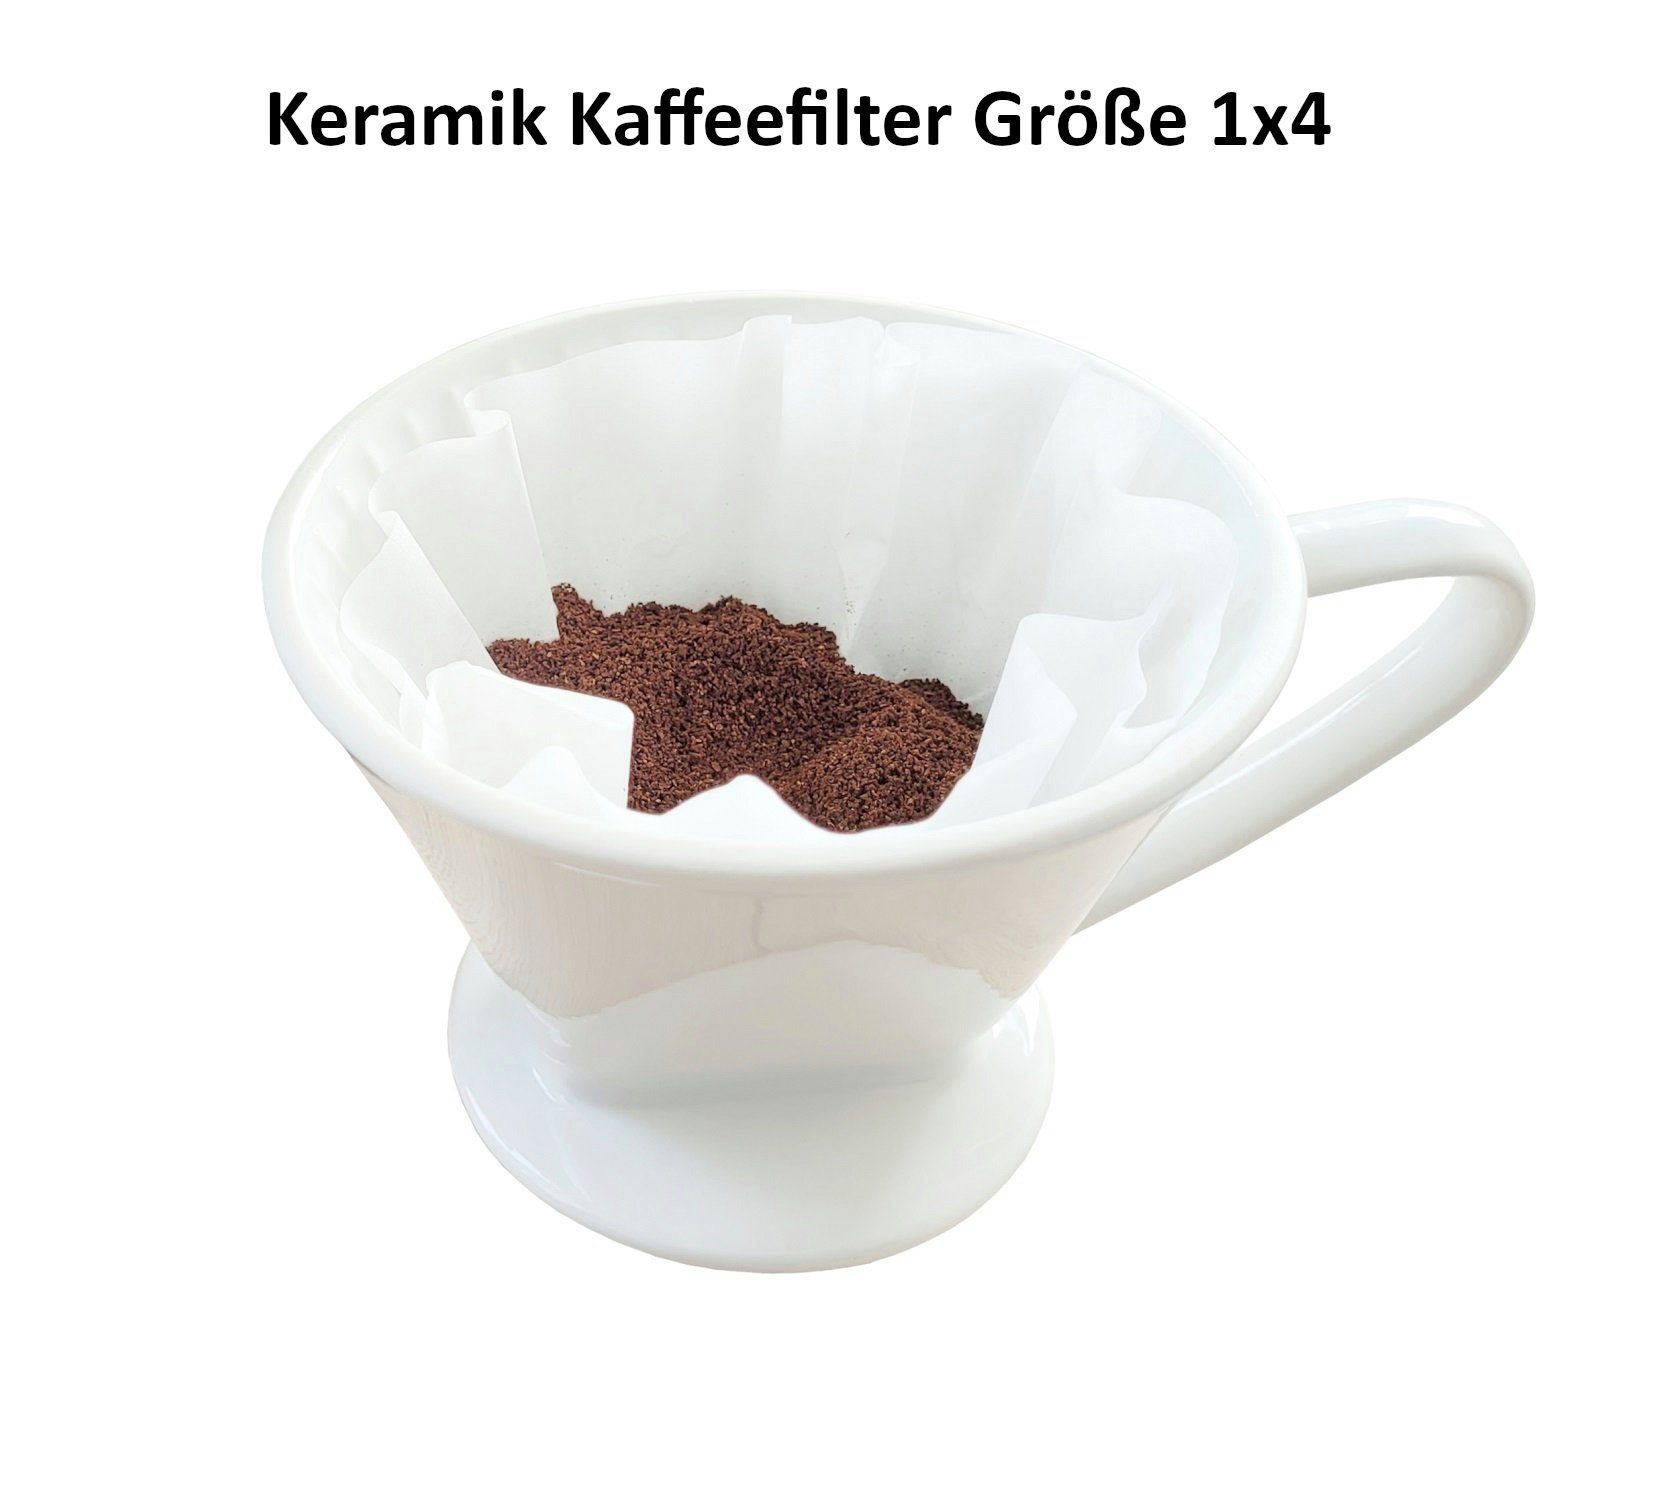 Kaffeefilter Filtertüten für Keramik 1x4, Permanentfilter 4 Keramikfilter Provance Größe